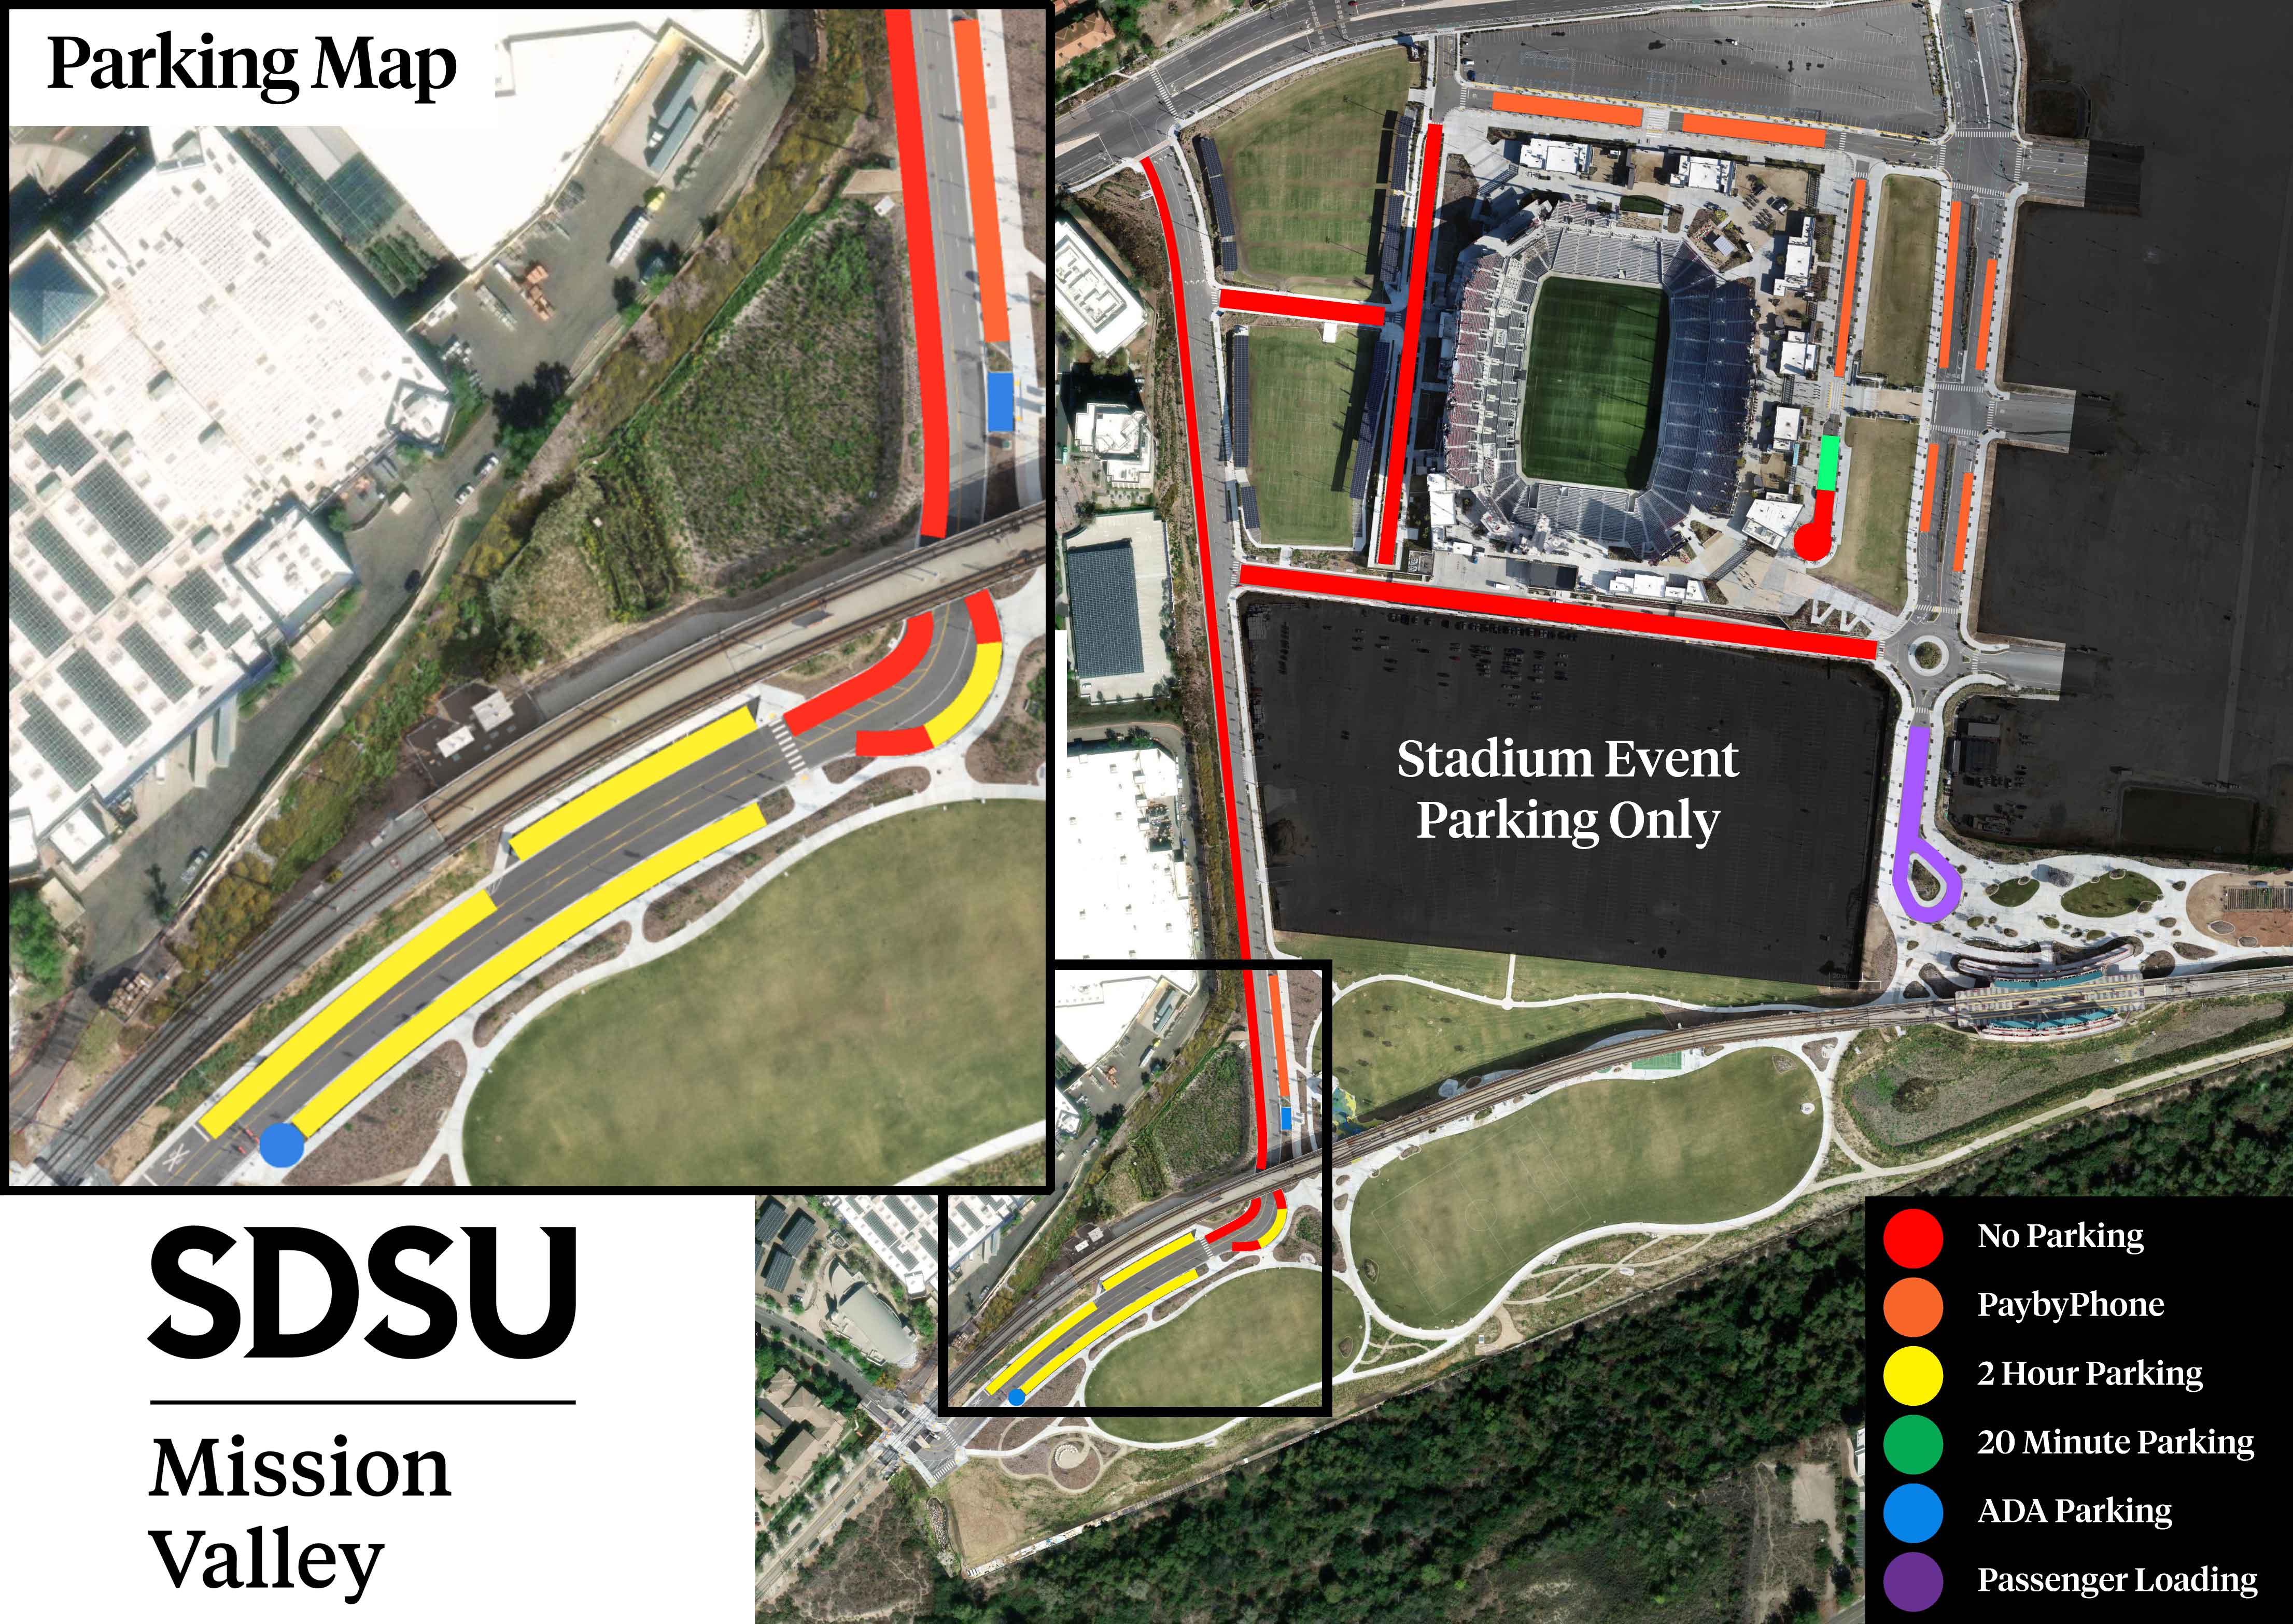 SDSU Mission Valley River Park Parking Map